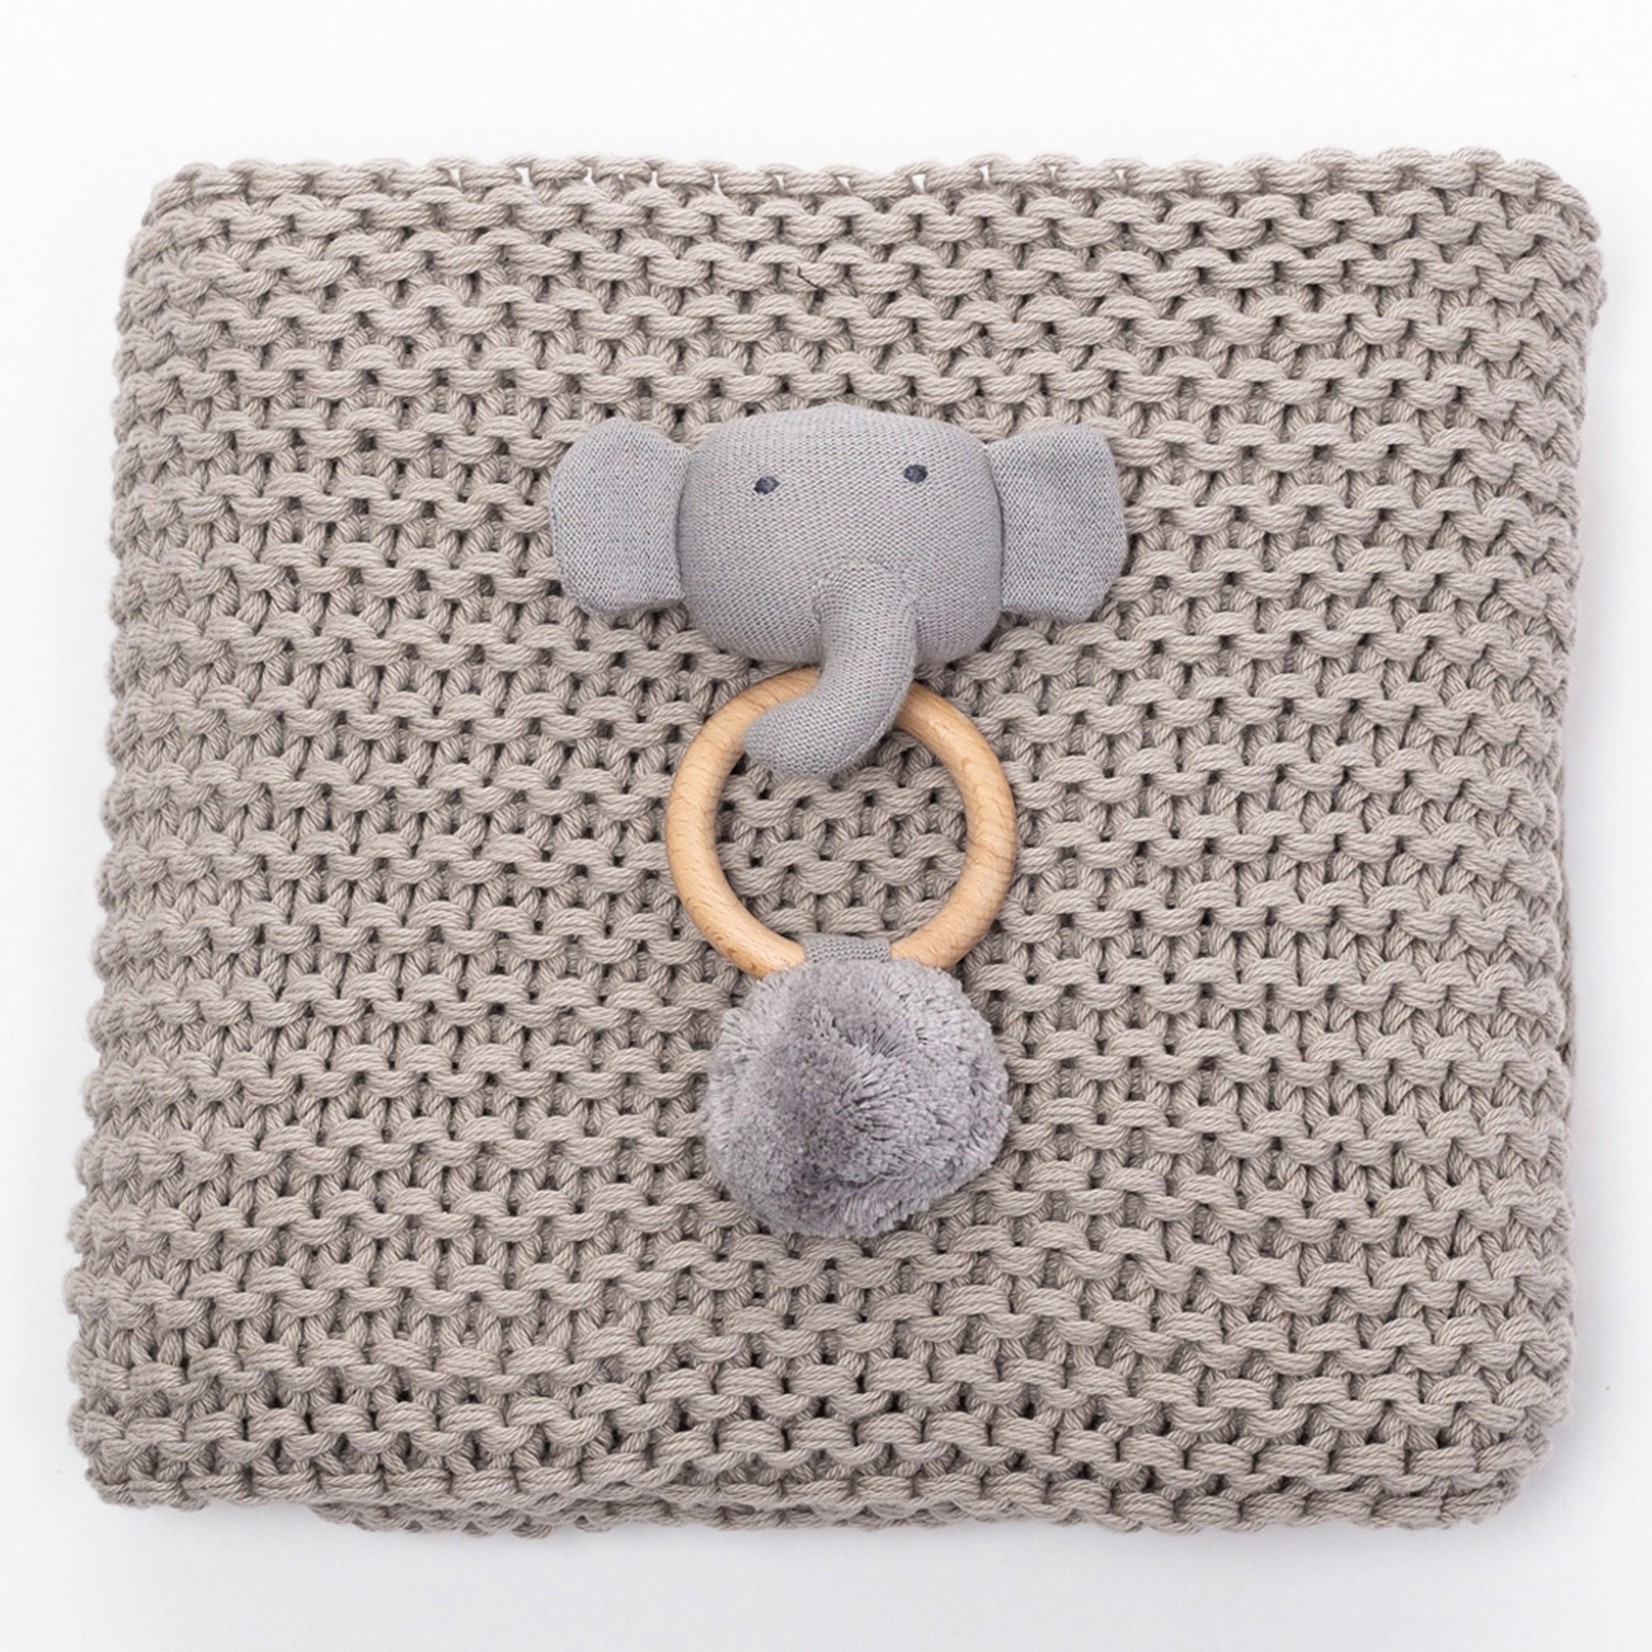 Zestt Organic Cotton Comfy Knit Baby Gift Set